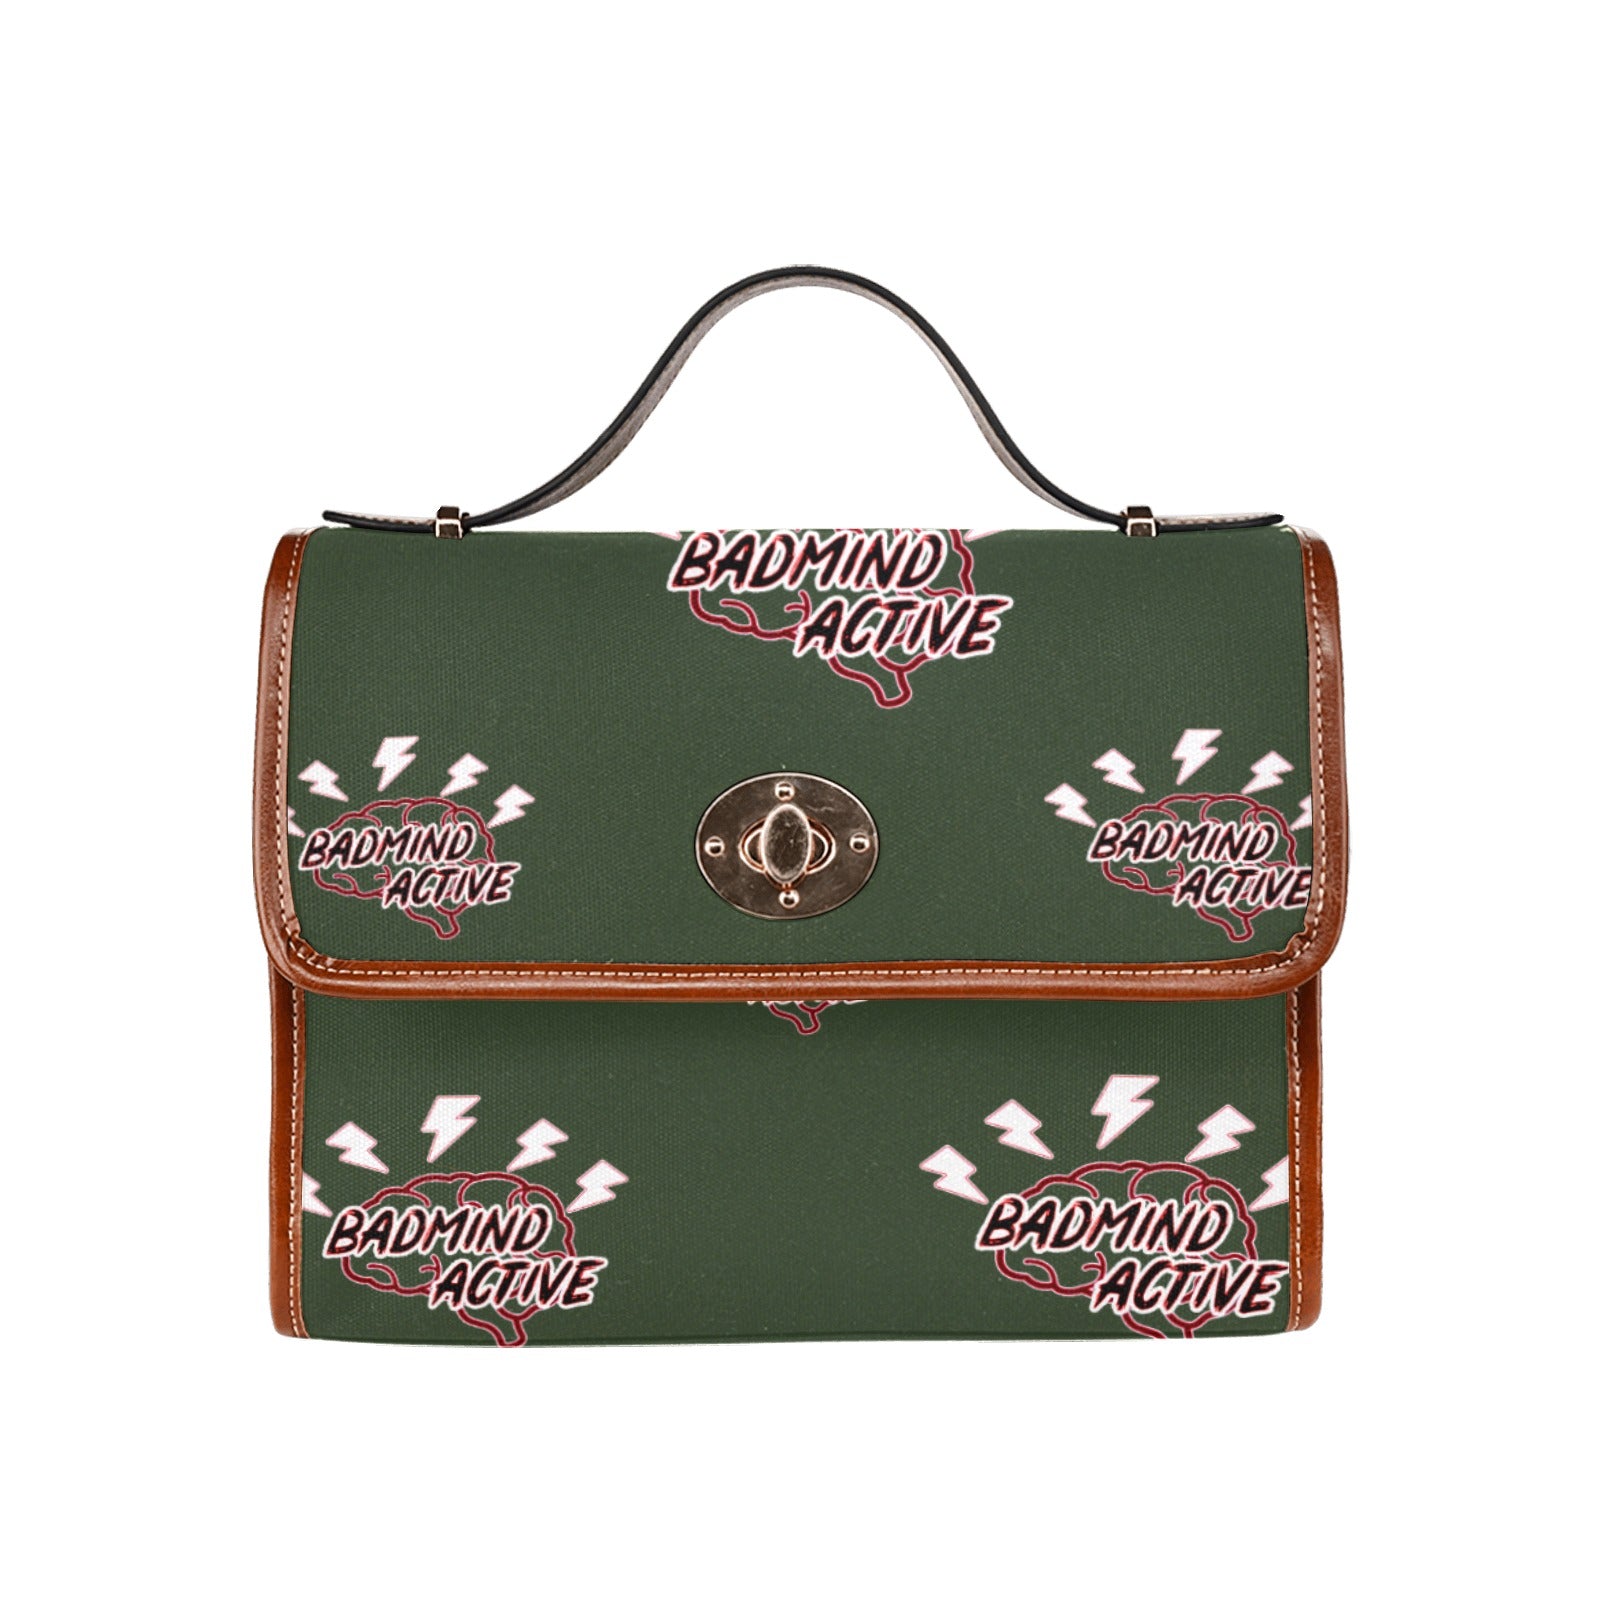 fz mind handbag one size / fz - mind bag-dark green all over print waterproof canvas bag(model1641)(brown strap)